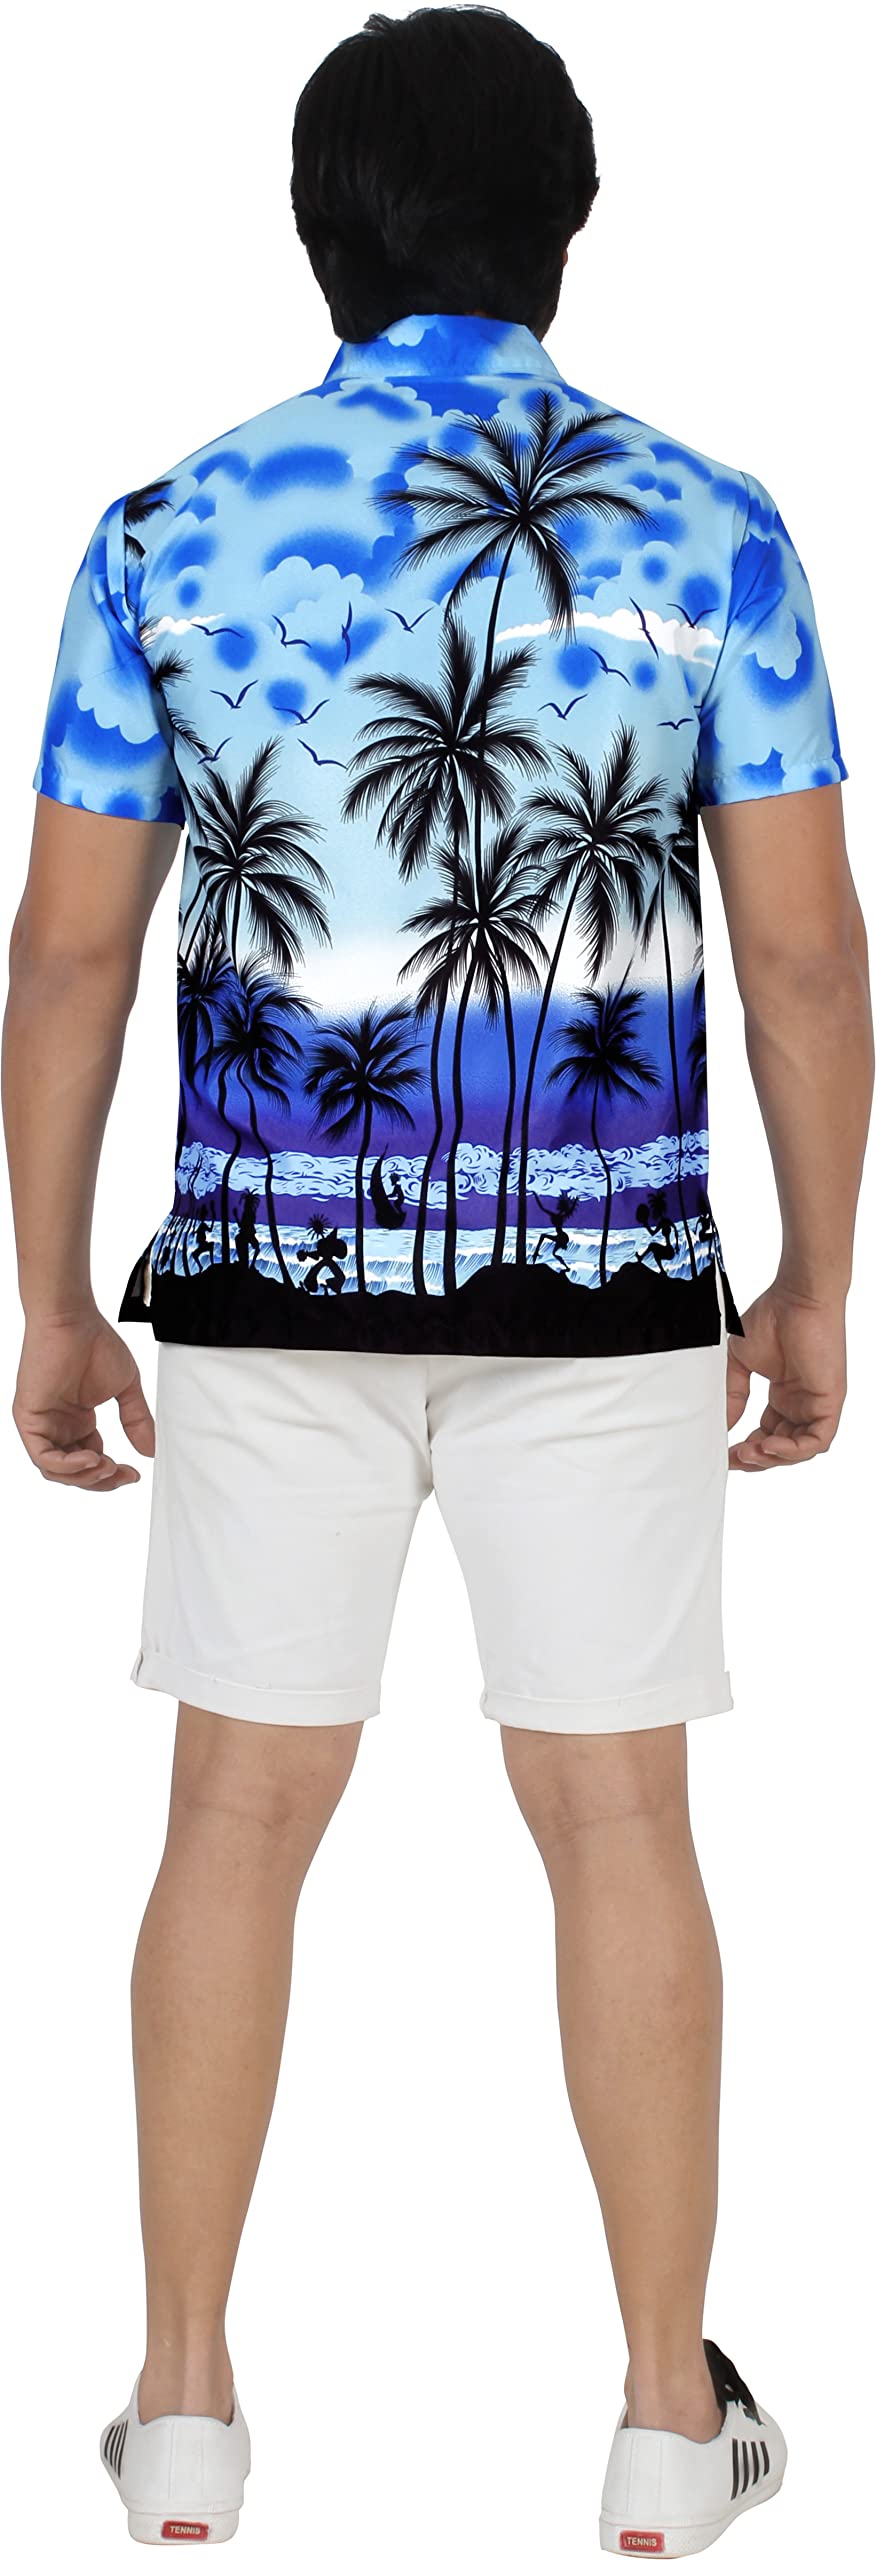 LA LEELA Men's Holiday Tropical Party Aloha Shirts Short Sleeve Button Down Beach Hawaiian Shirt for Men